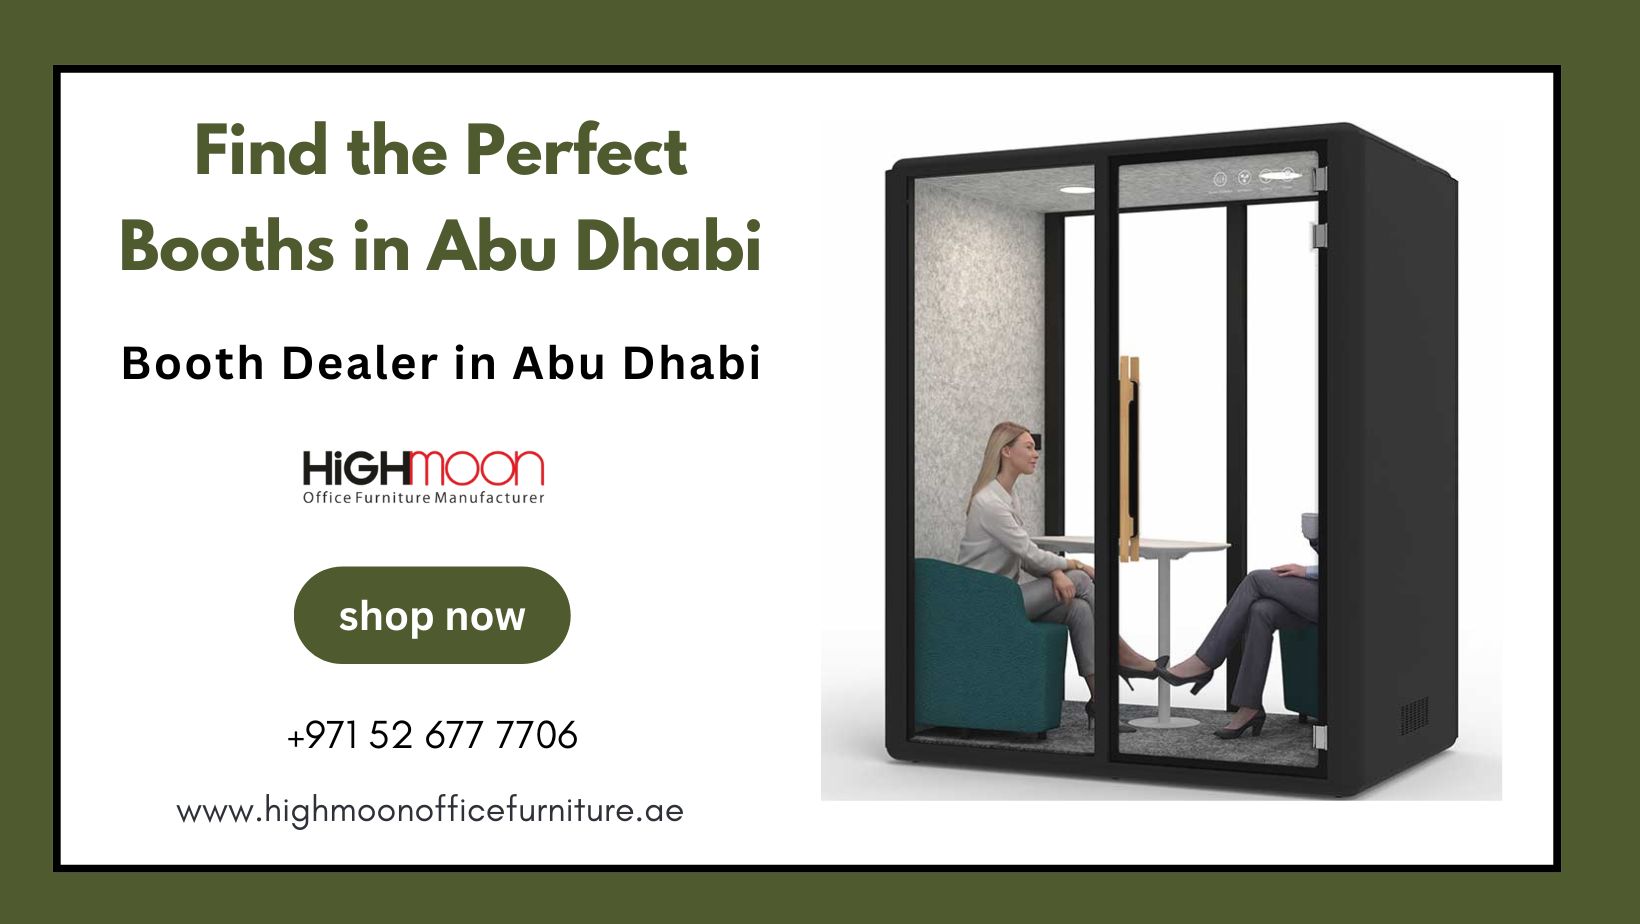 Booth Dealer in Abu Dhabi